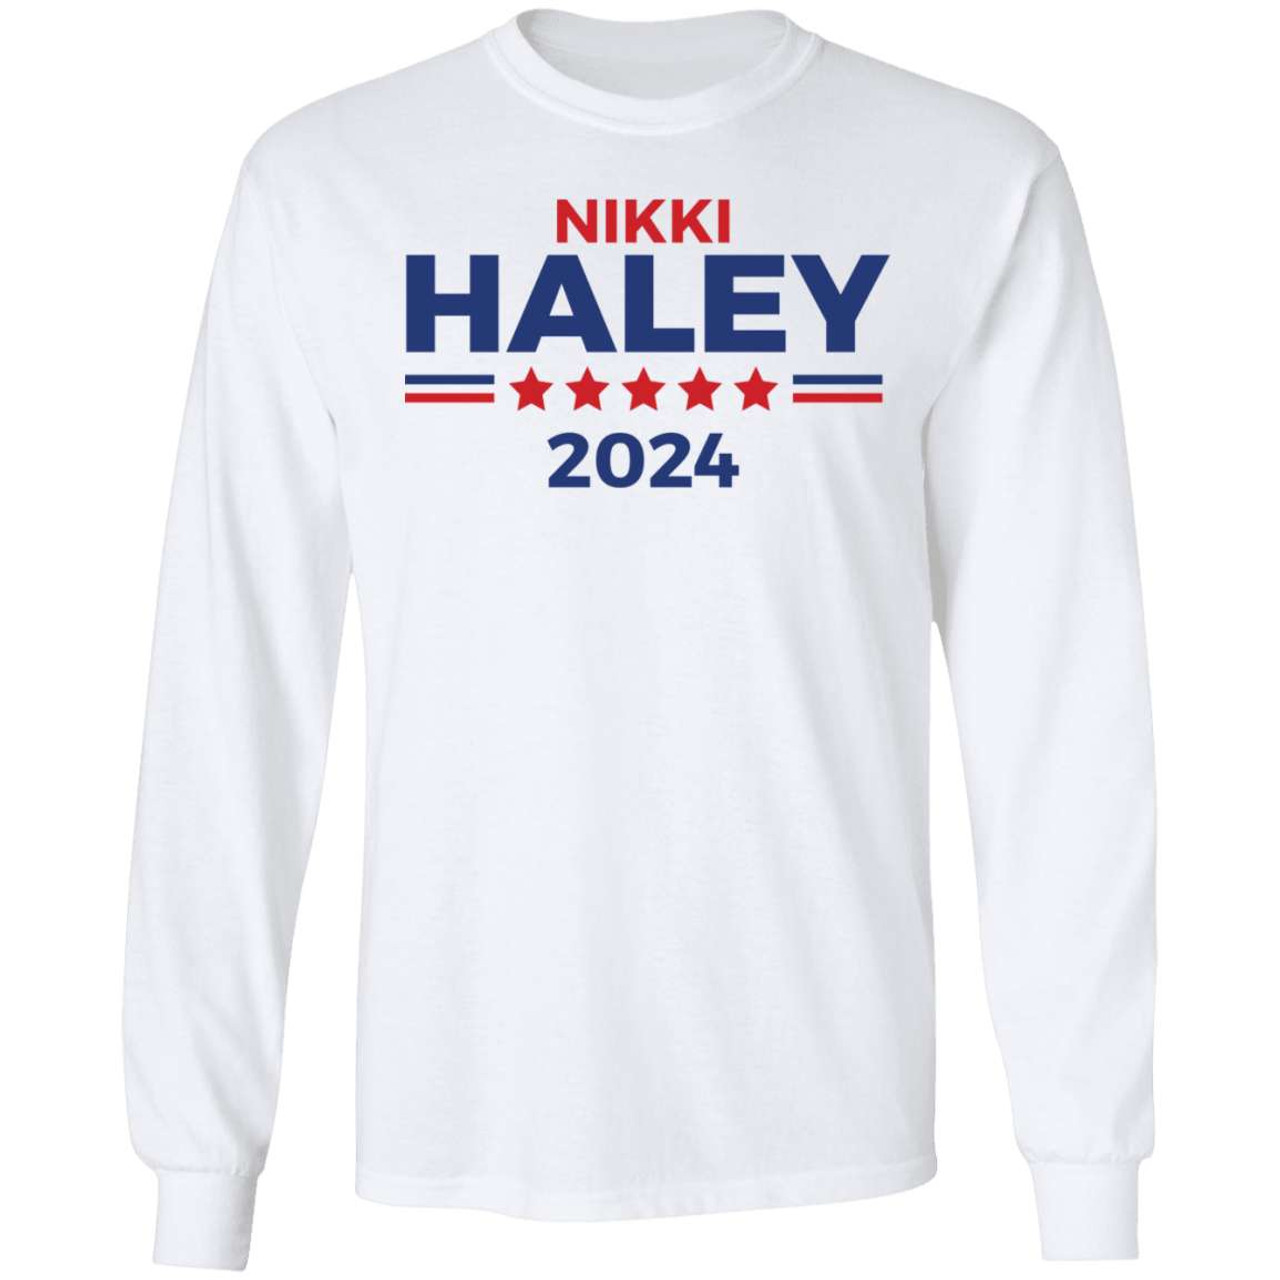 Nikki Haley 2024 Long Sleeve T-Shirt | Presidential Election